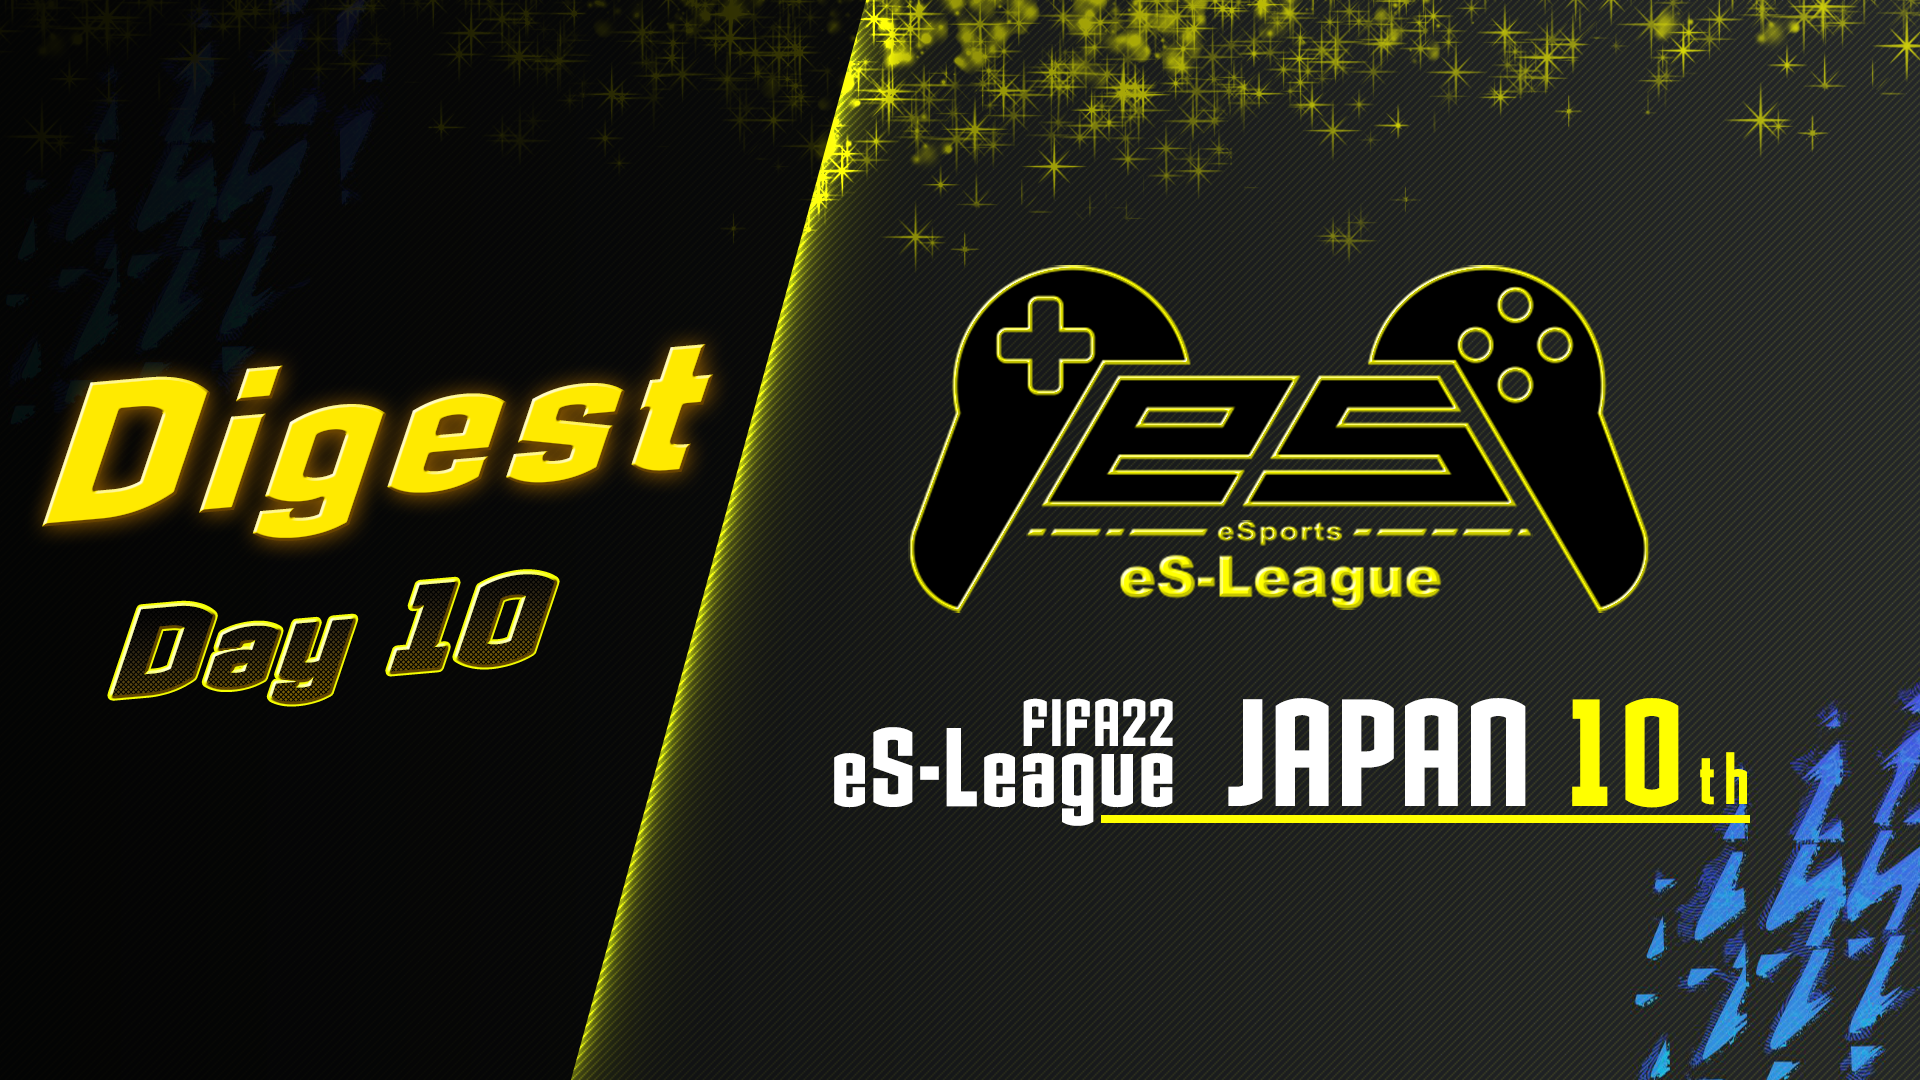 FIFA22 eS-League JAPAN 10th DAY10 ダイジェスト